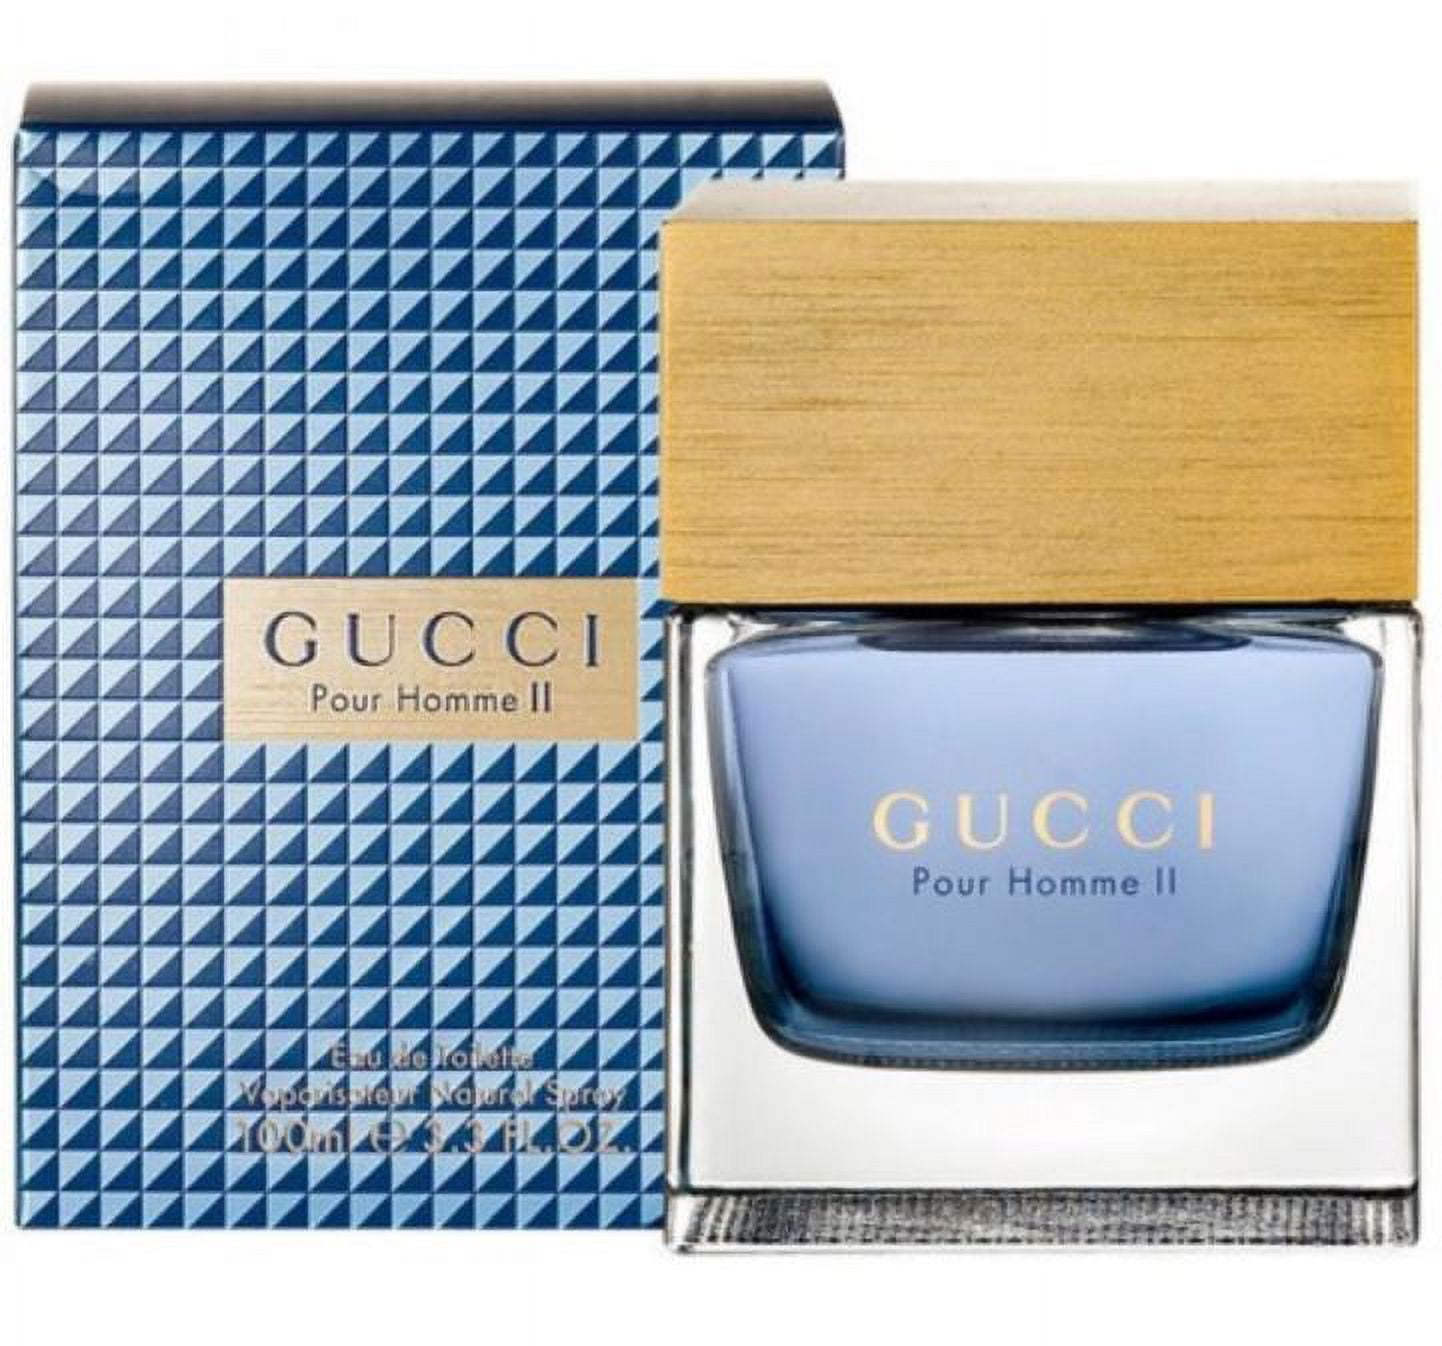 Туалетная вода gucci pour homme. Gucci "Gucci pour homme" 100 ml. Gucci pour homme II. Туалетная вода Gucci pour homme II. Gucci туалетная вода Gucci pour homme II.